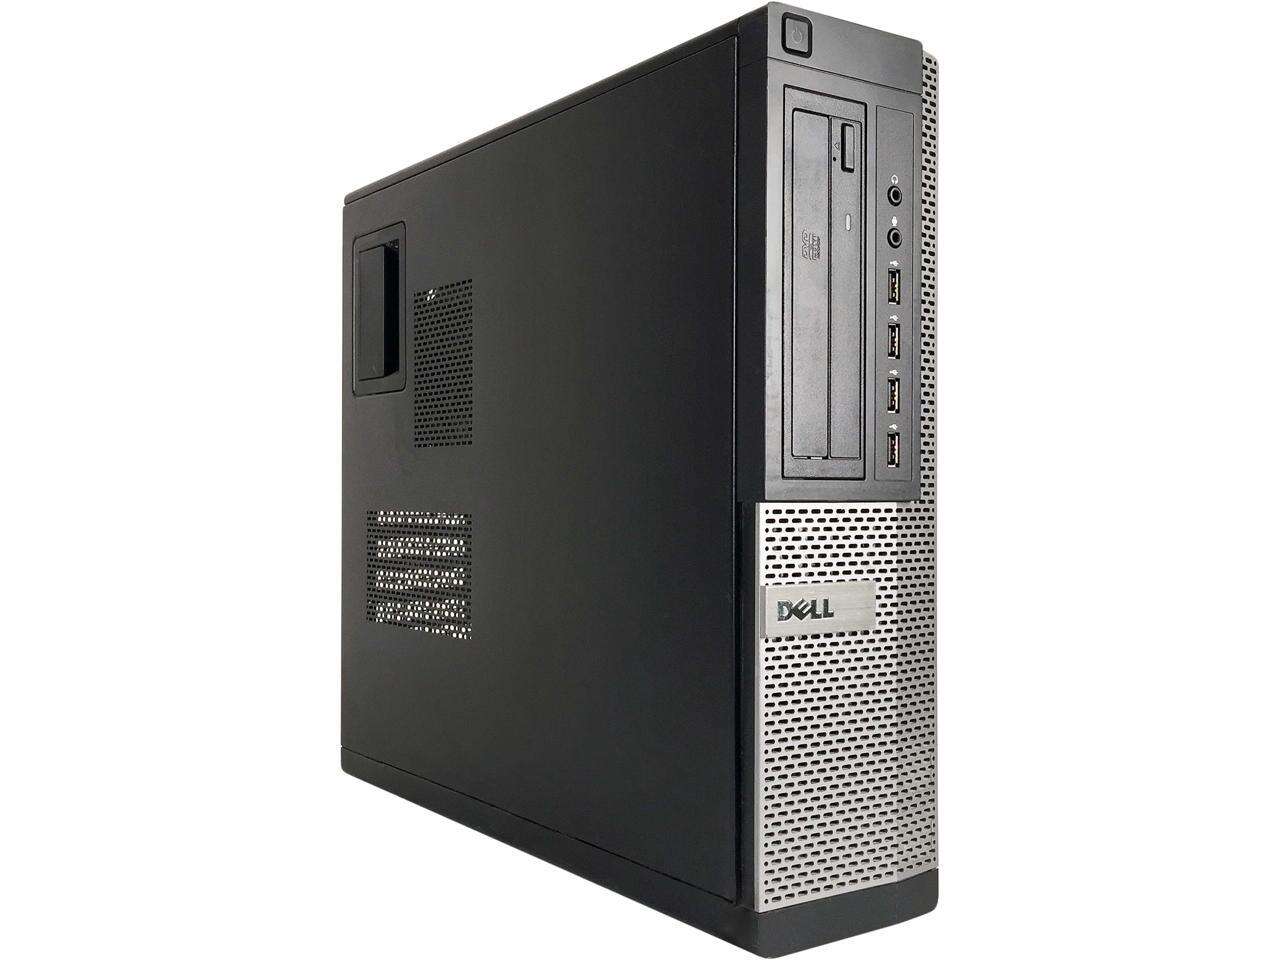 Dell Grade A OptiPlex 790 Desktop Computer, Intel Core i7 2600 (3.40 GHz), 8GB DDR3, 500G, DVD, USB WIFI Adapter, USB Bluetooth Adapter, Windows 10 Home 64-bit Multi-language